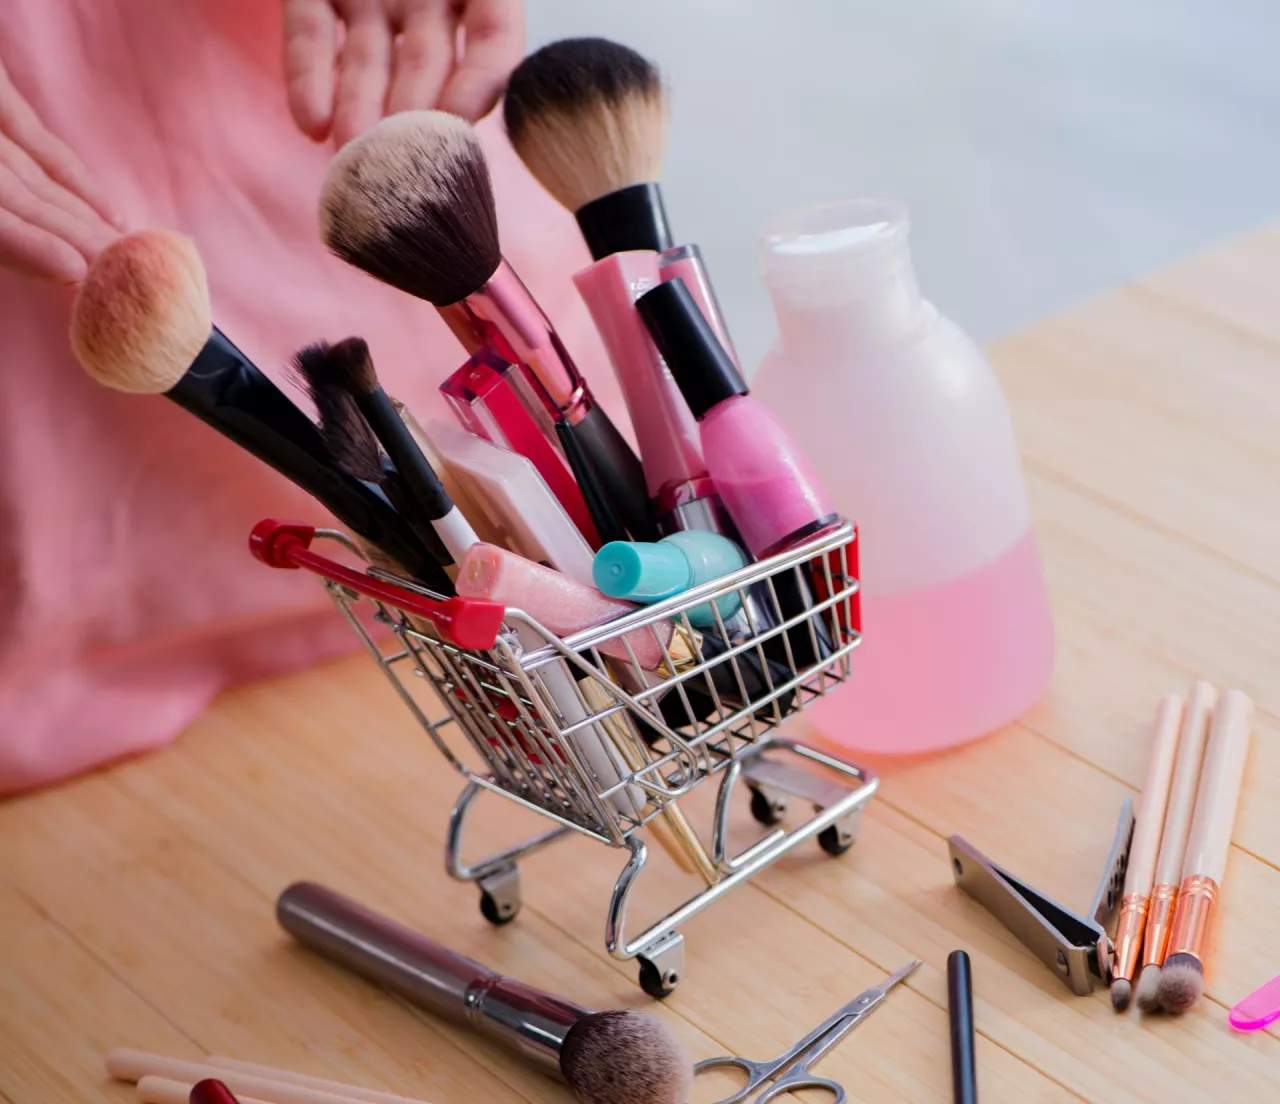 Kosmetyki (Shutterstock)